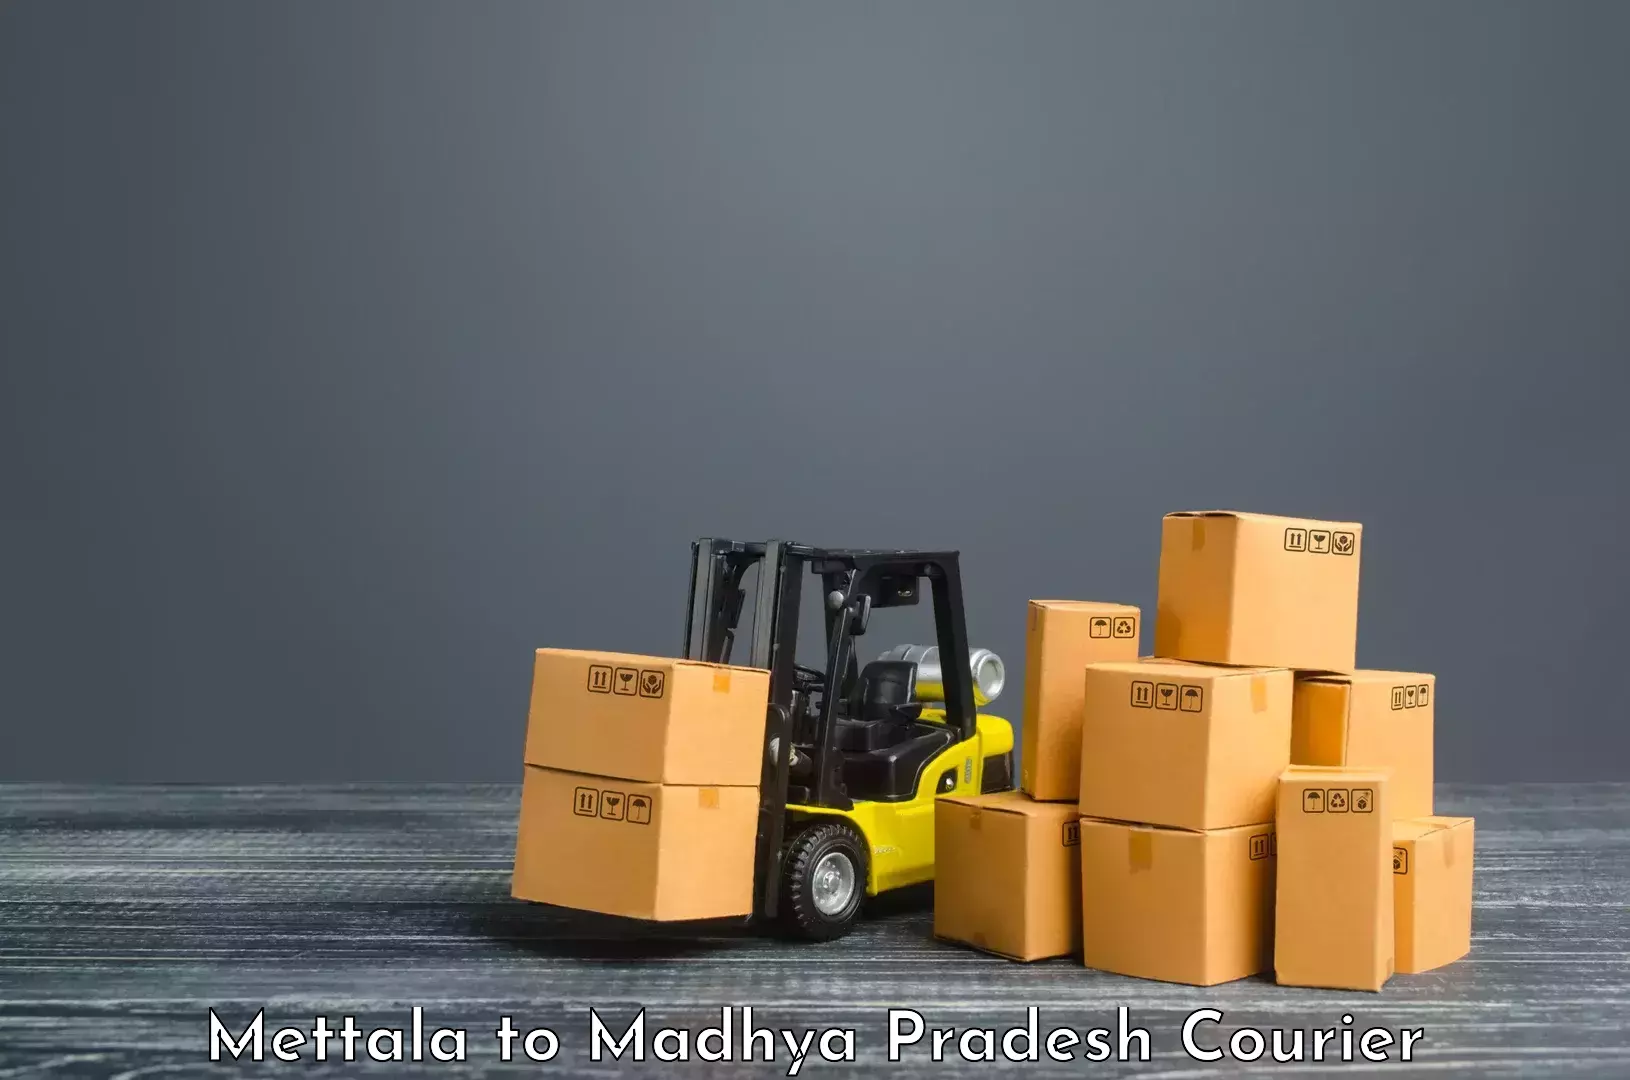 Nationwide delivery network Mettala to Jatara